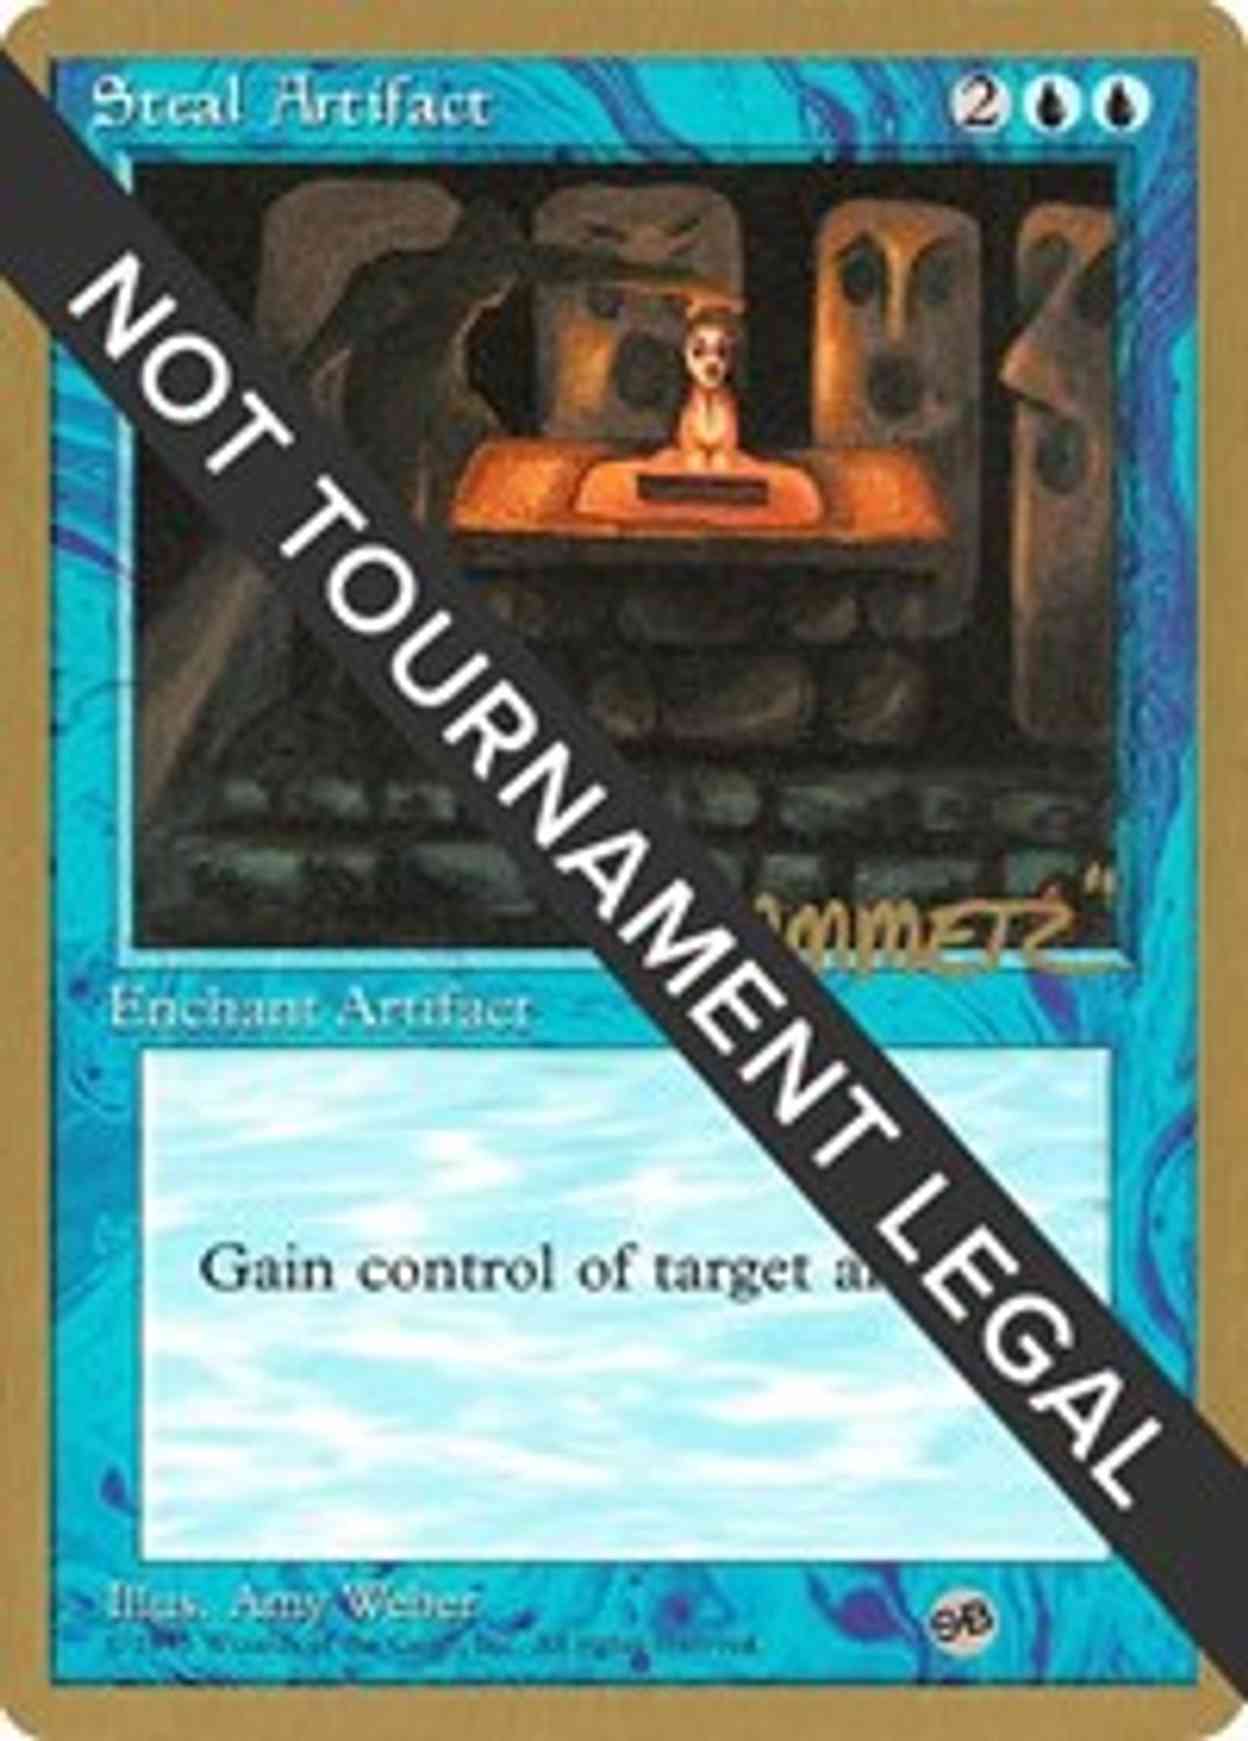 Steal Artifact - 1996 Shawn "Hammer" Regnier (4ED) (SB) magic card front